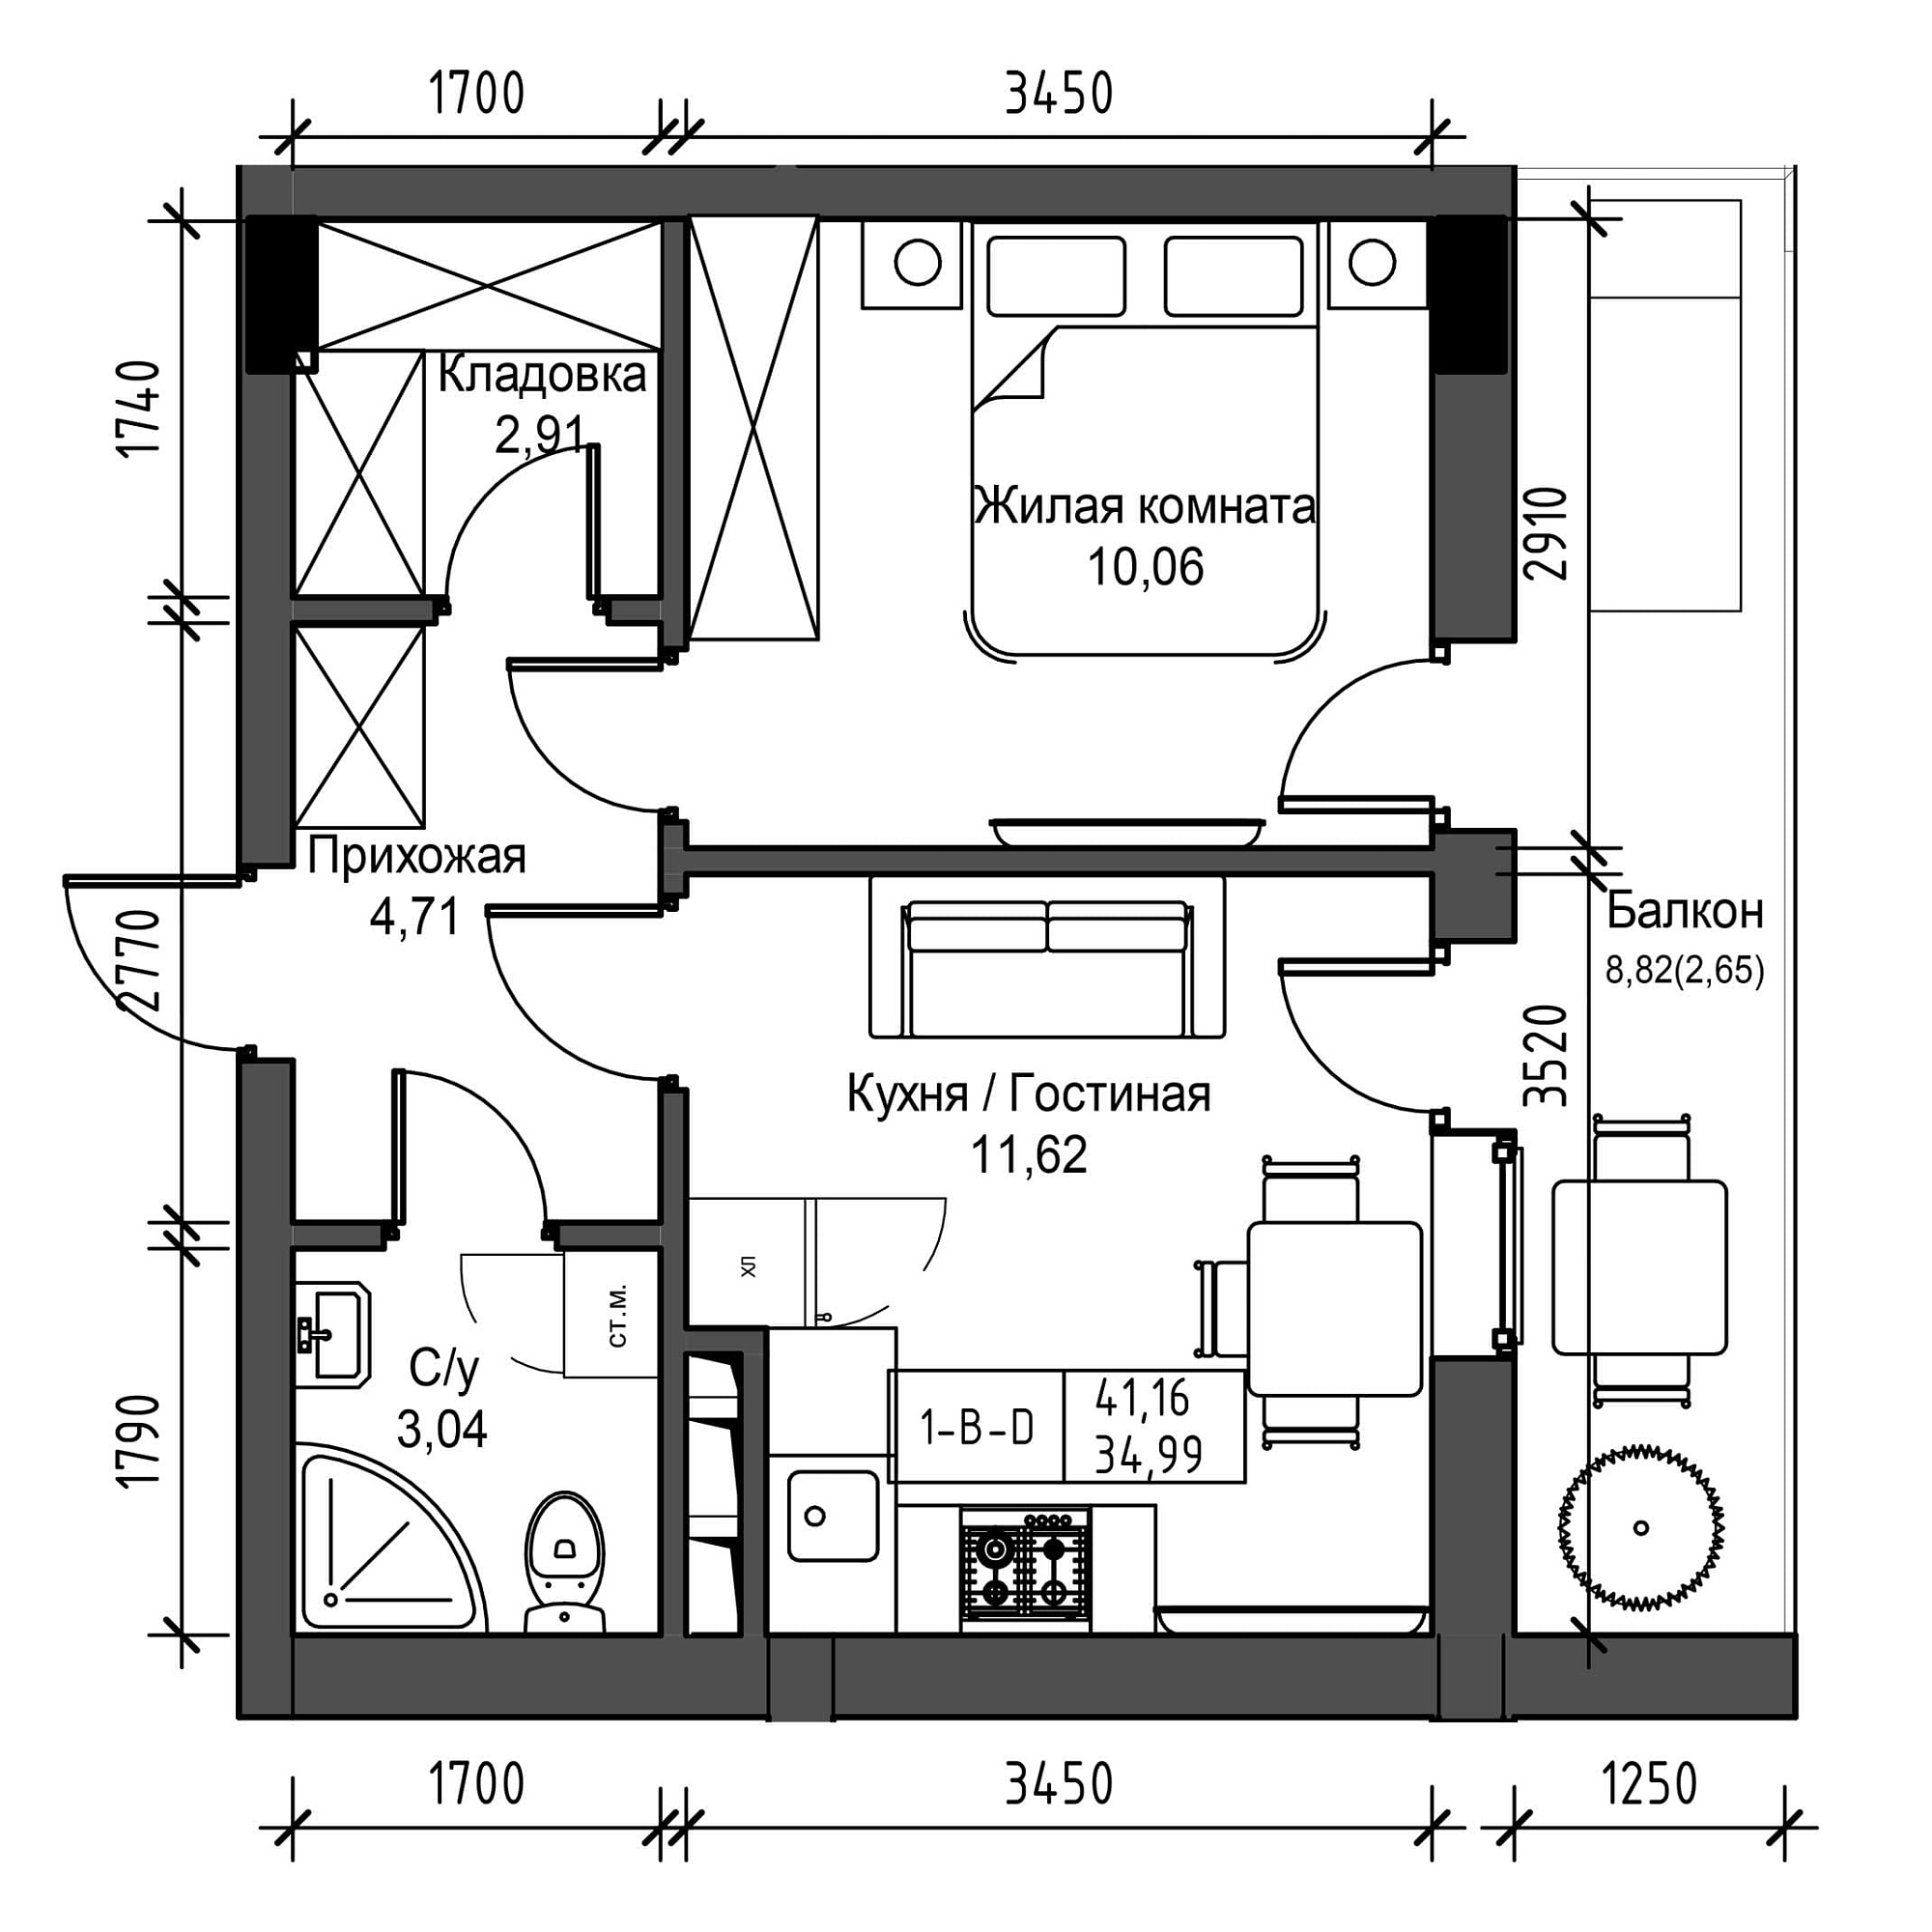 Планування 1-к квартира площею 34.99м2, UM-001-06/0024.